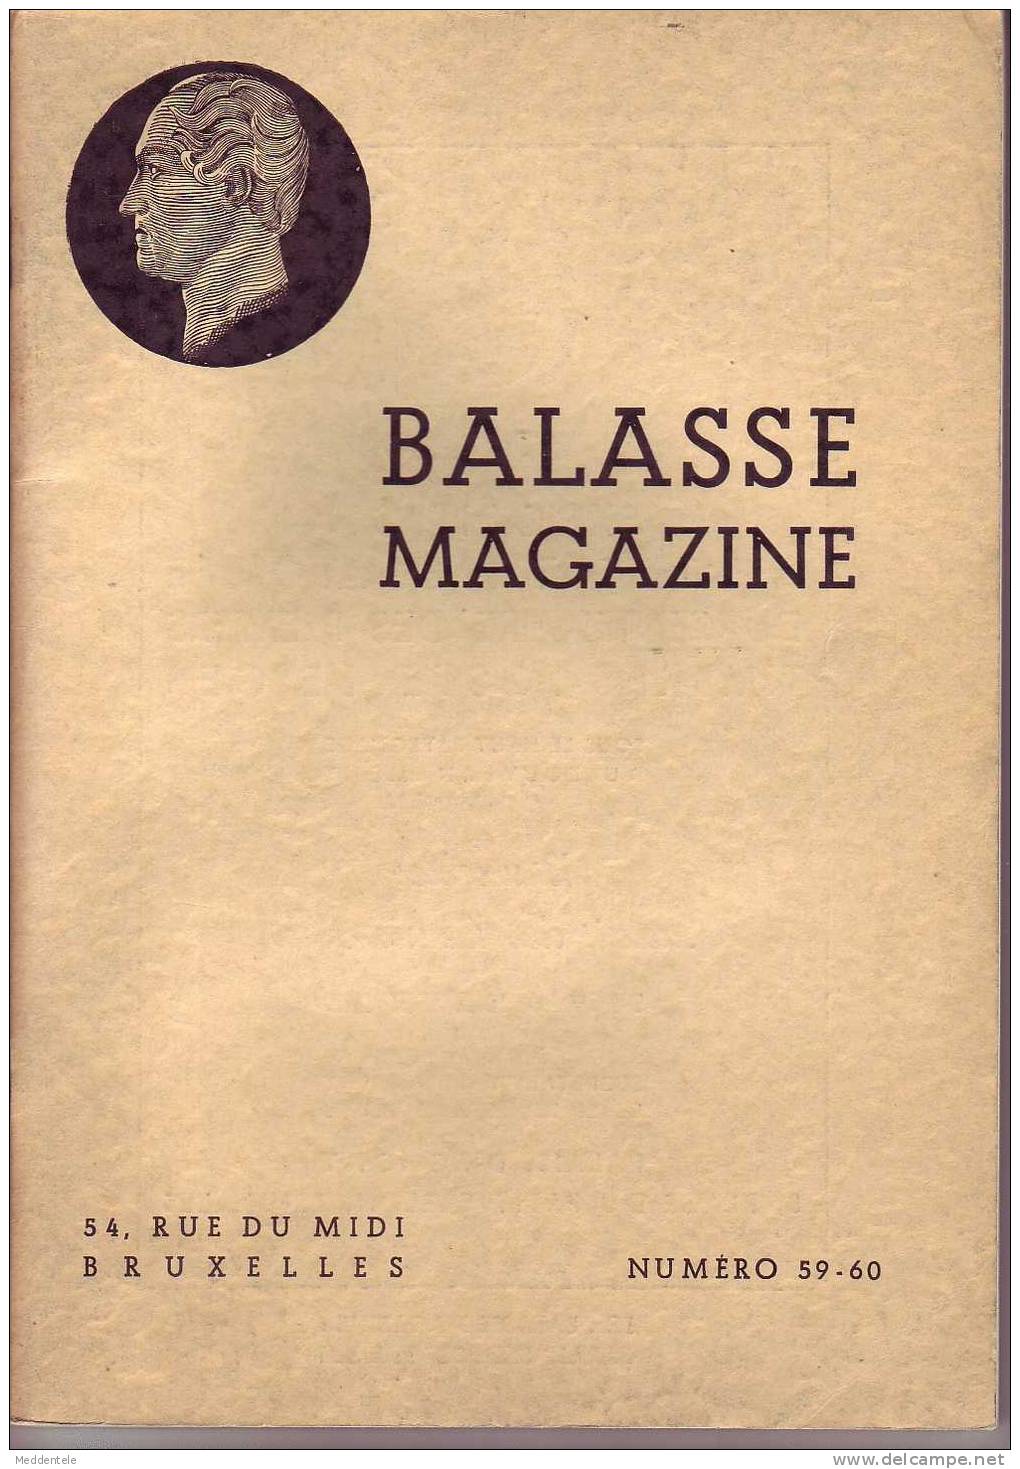 BALASSE MAGAZINE N° 59/60 - French (from 1941)